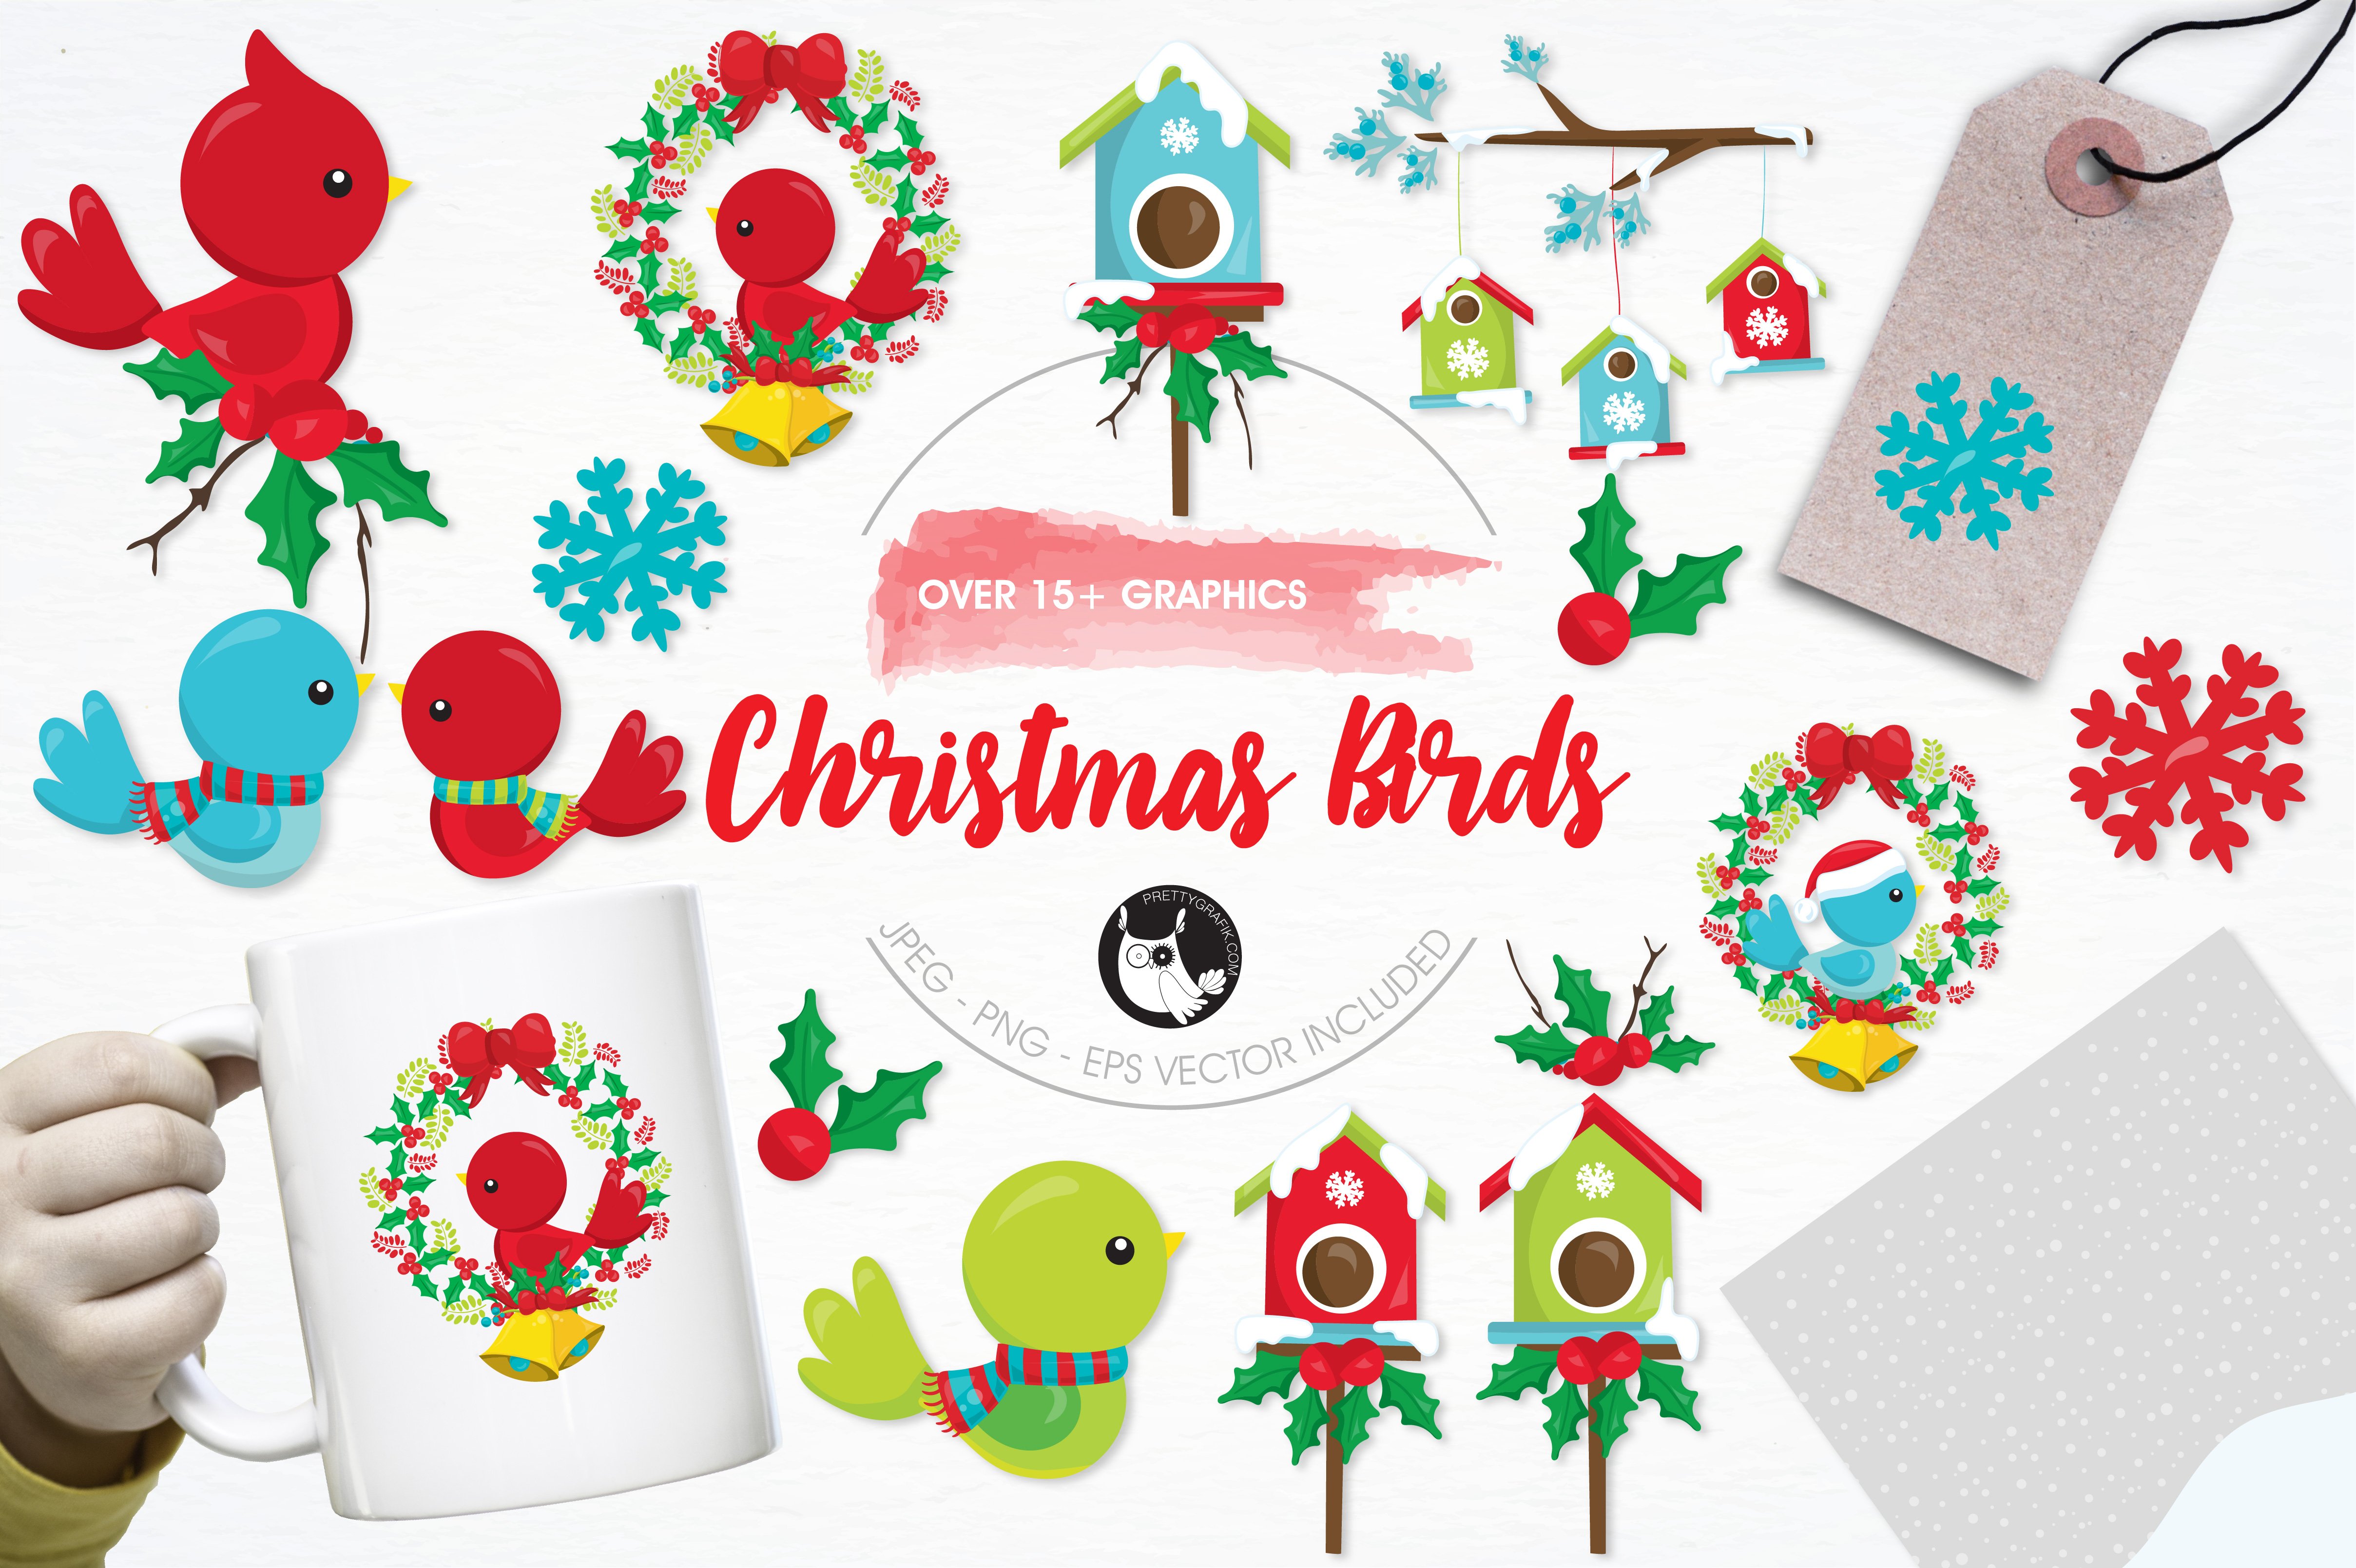 Christmas Birds Illustration Pack - Vector Image